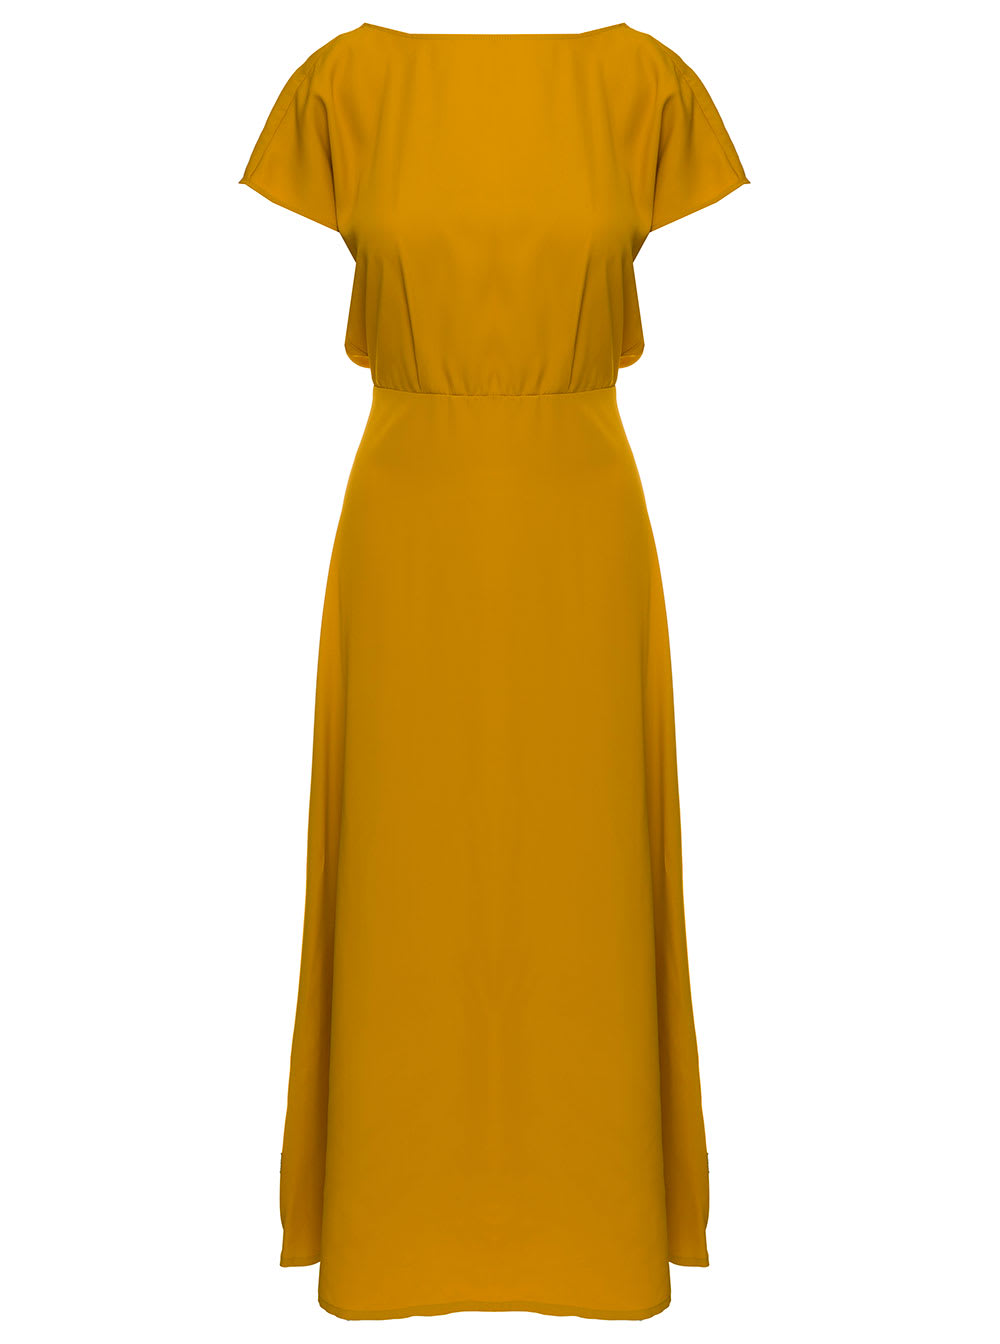 Mauro Grifoni Grigfoni Womans Mustard-colored Viscose Long Dress